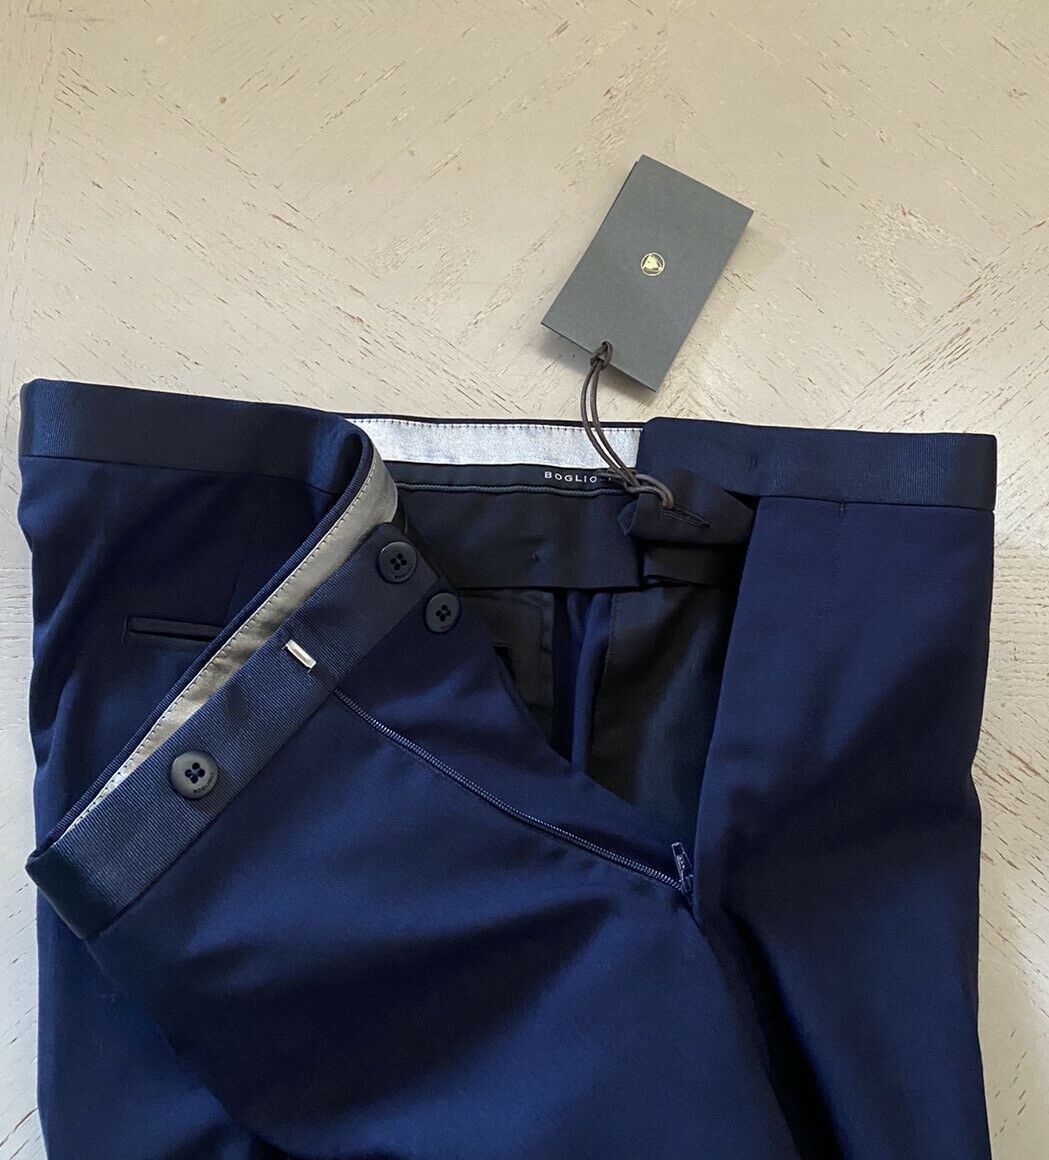 NWT $950 Boglioli Men’s Tuxedo Pants Navy 38 US ( 54 Eu ) Italy